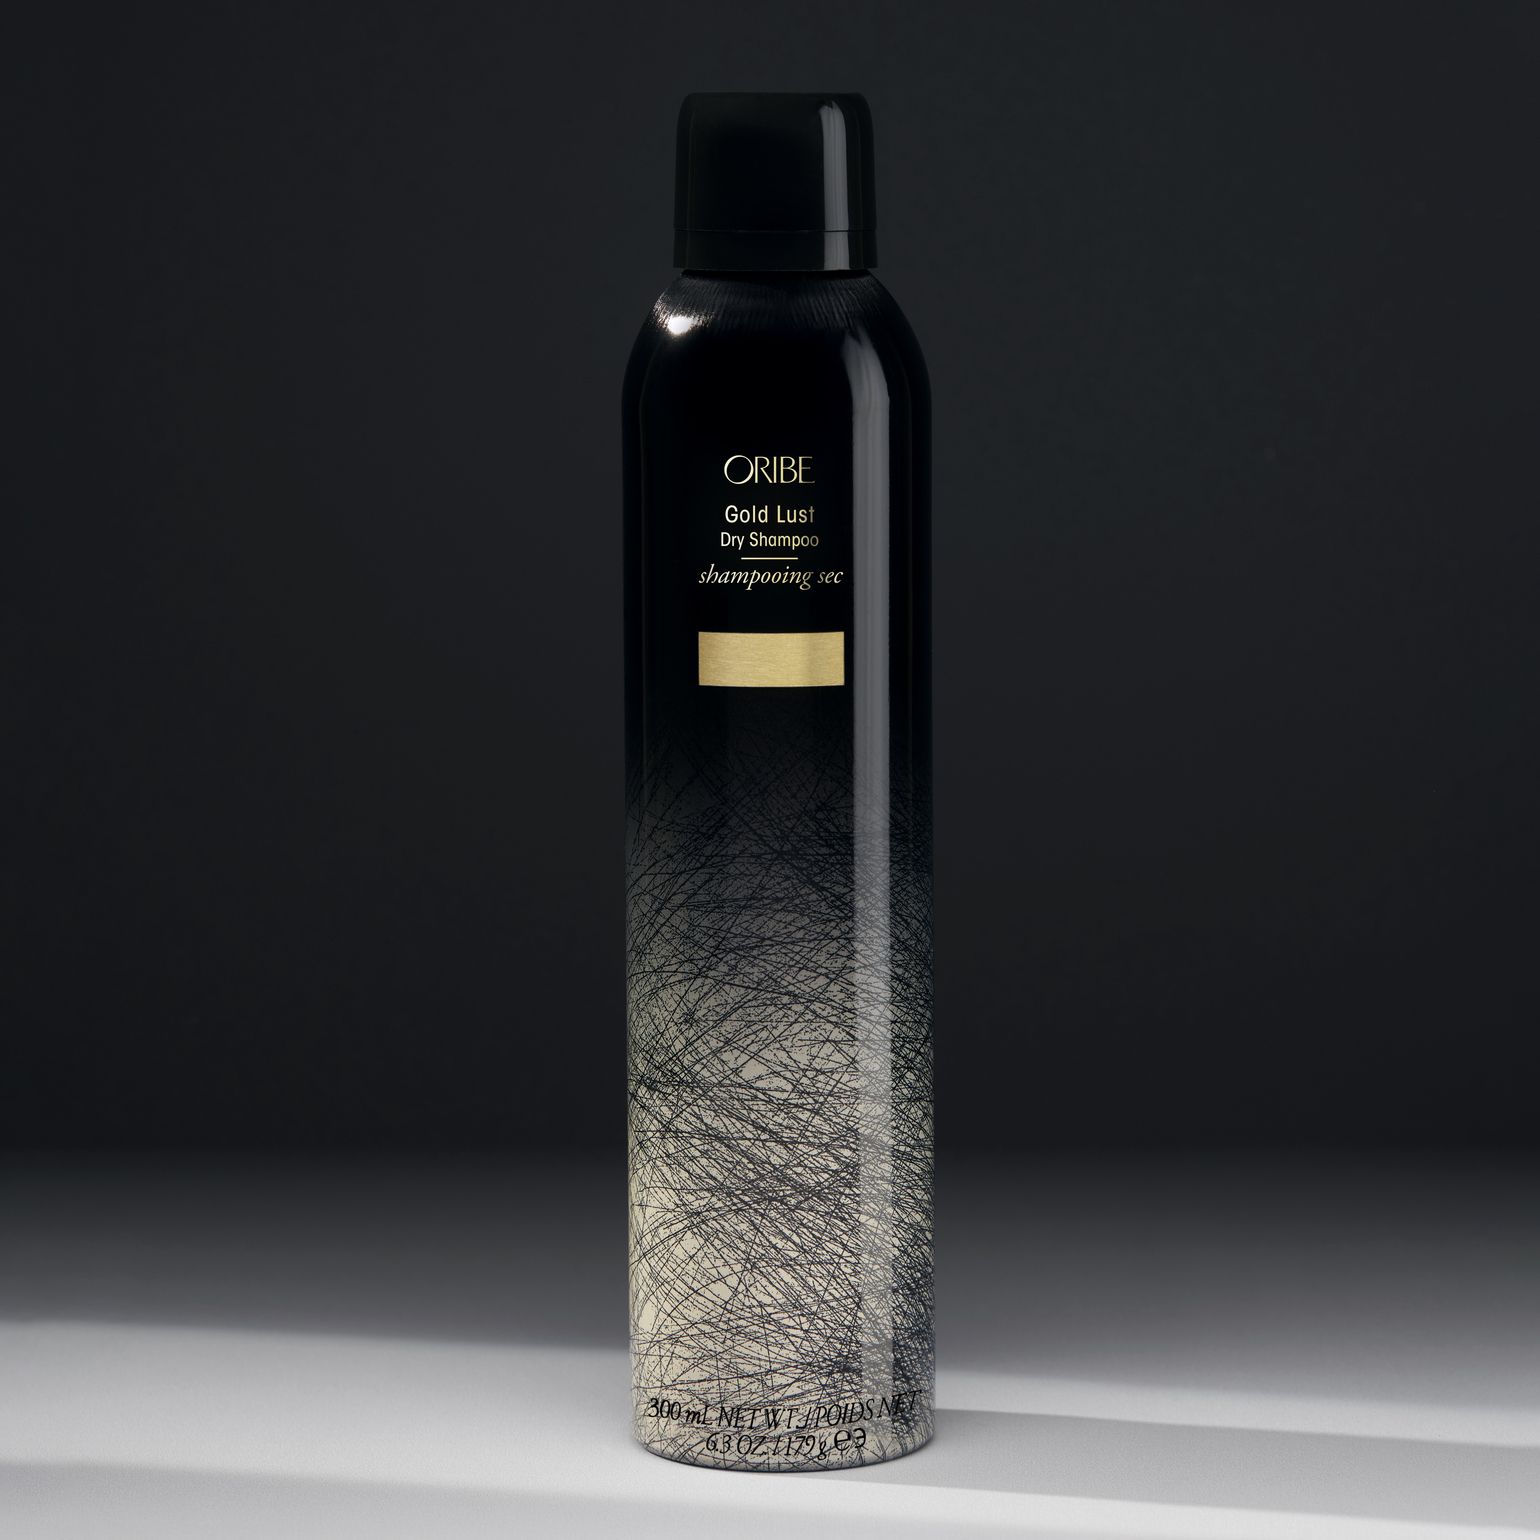 Gold Lust Dry Shampoo | Oribe Hair Care